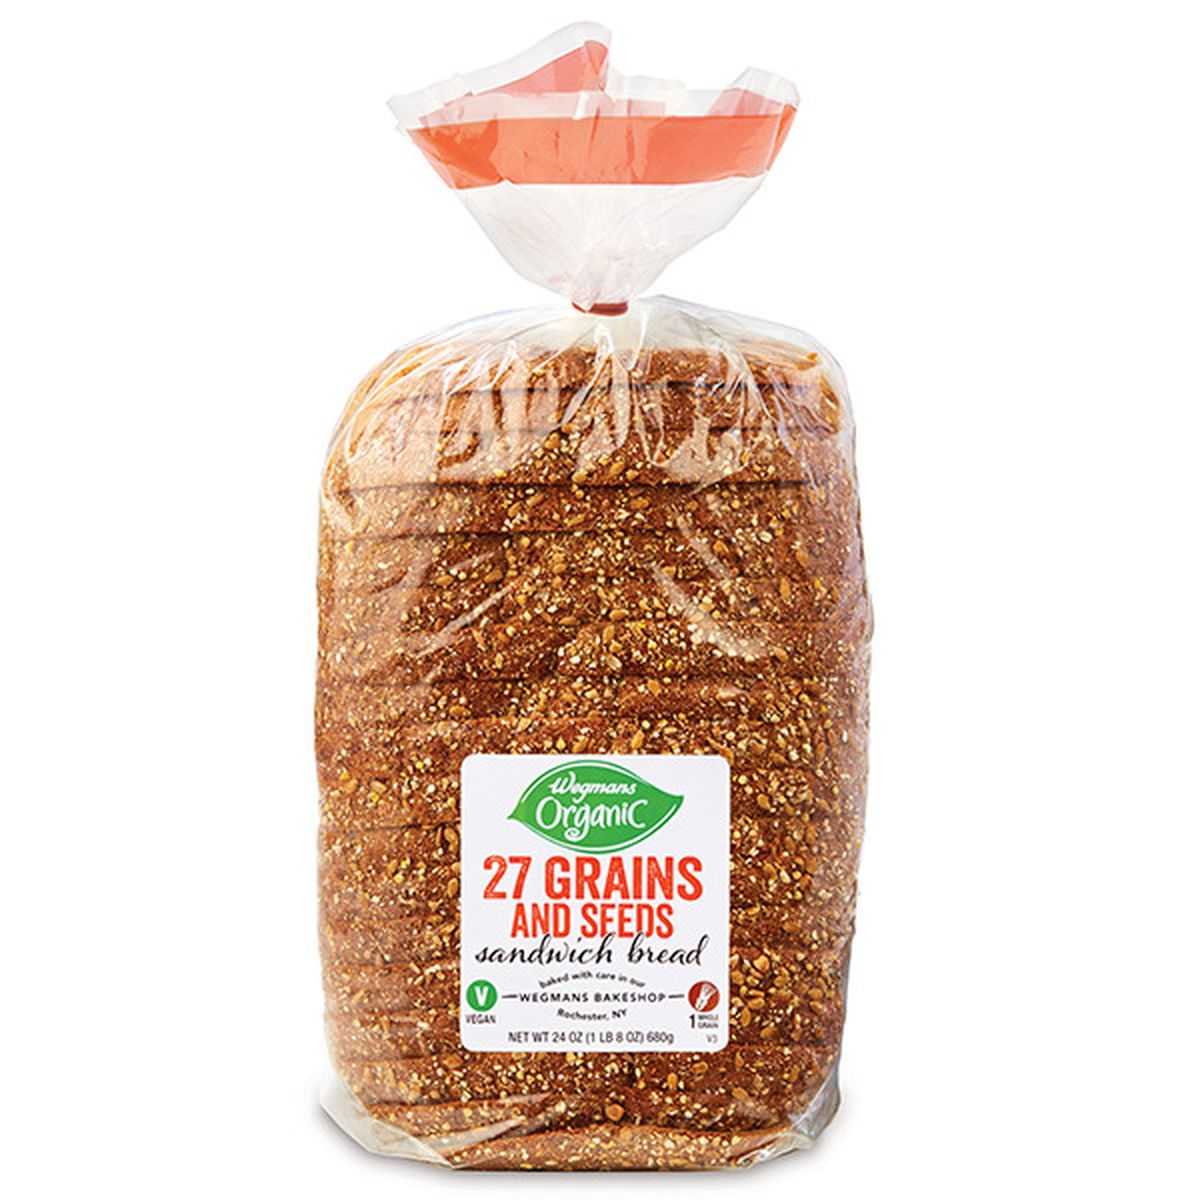 Calories in Wegmans Organic 27 Grains and Seeds Sandwich Bread